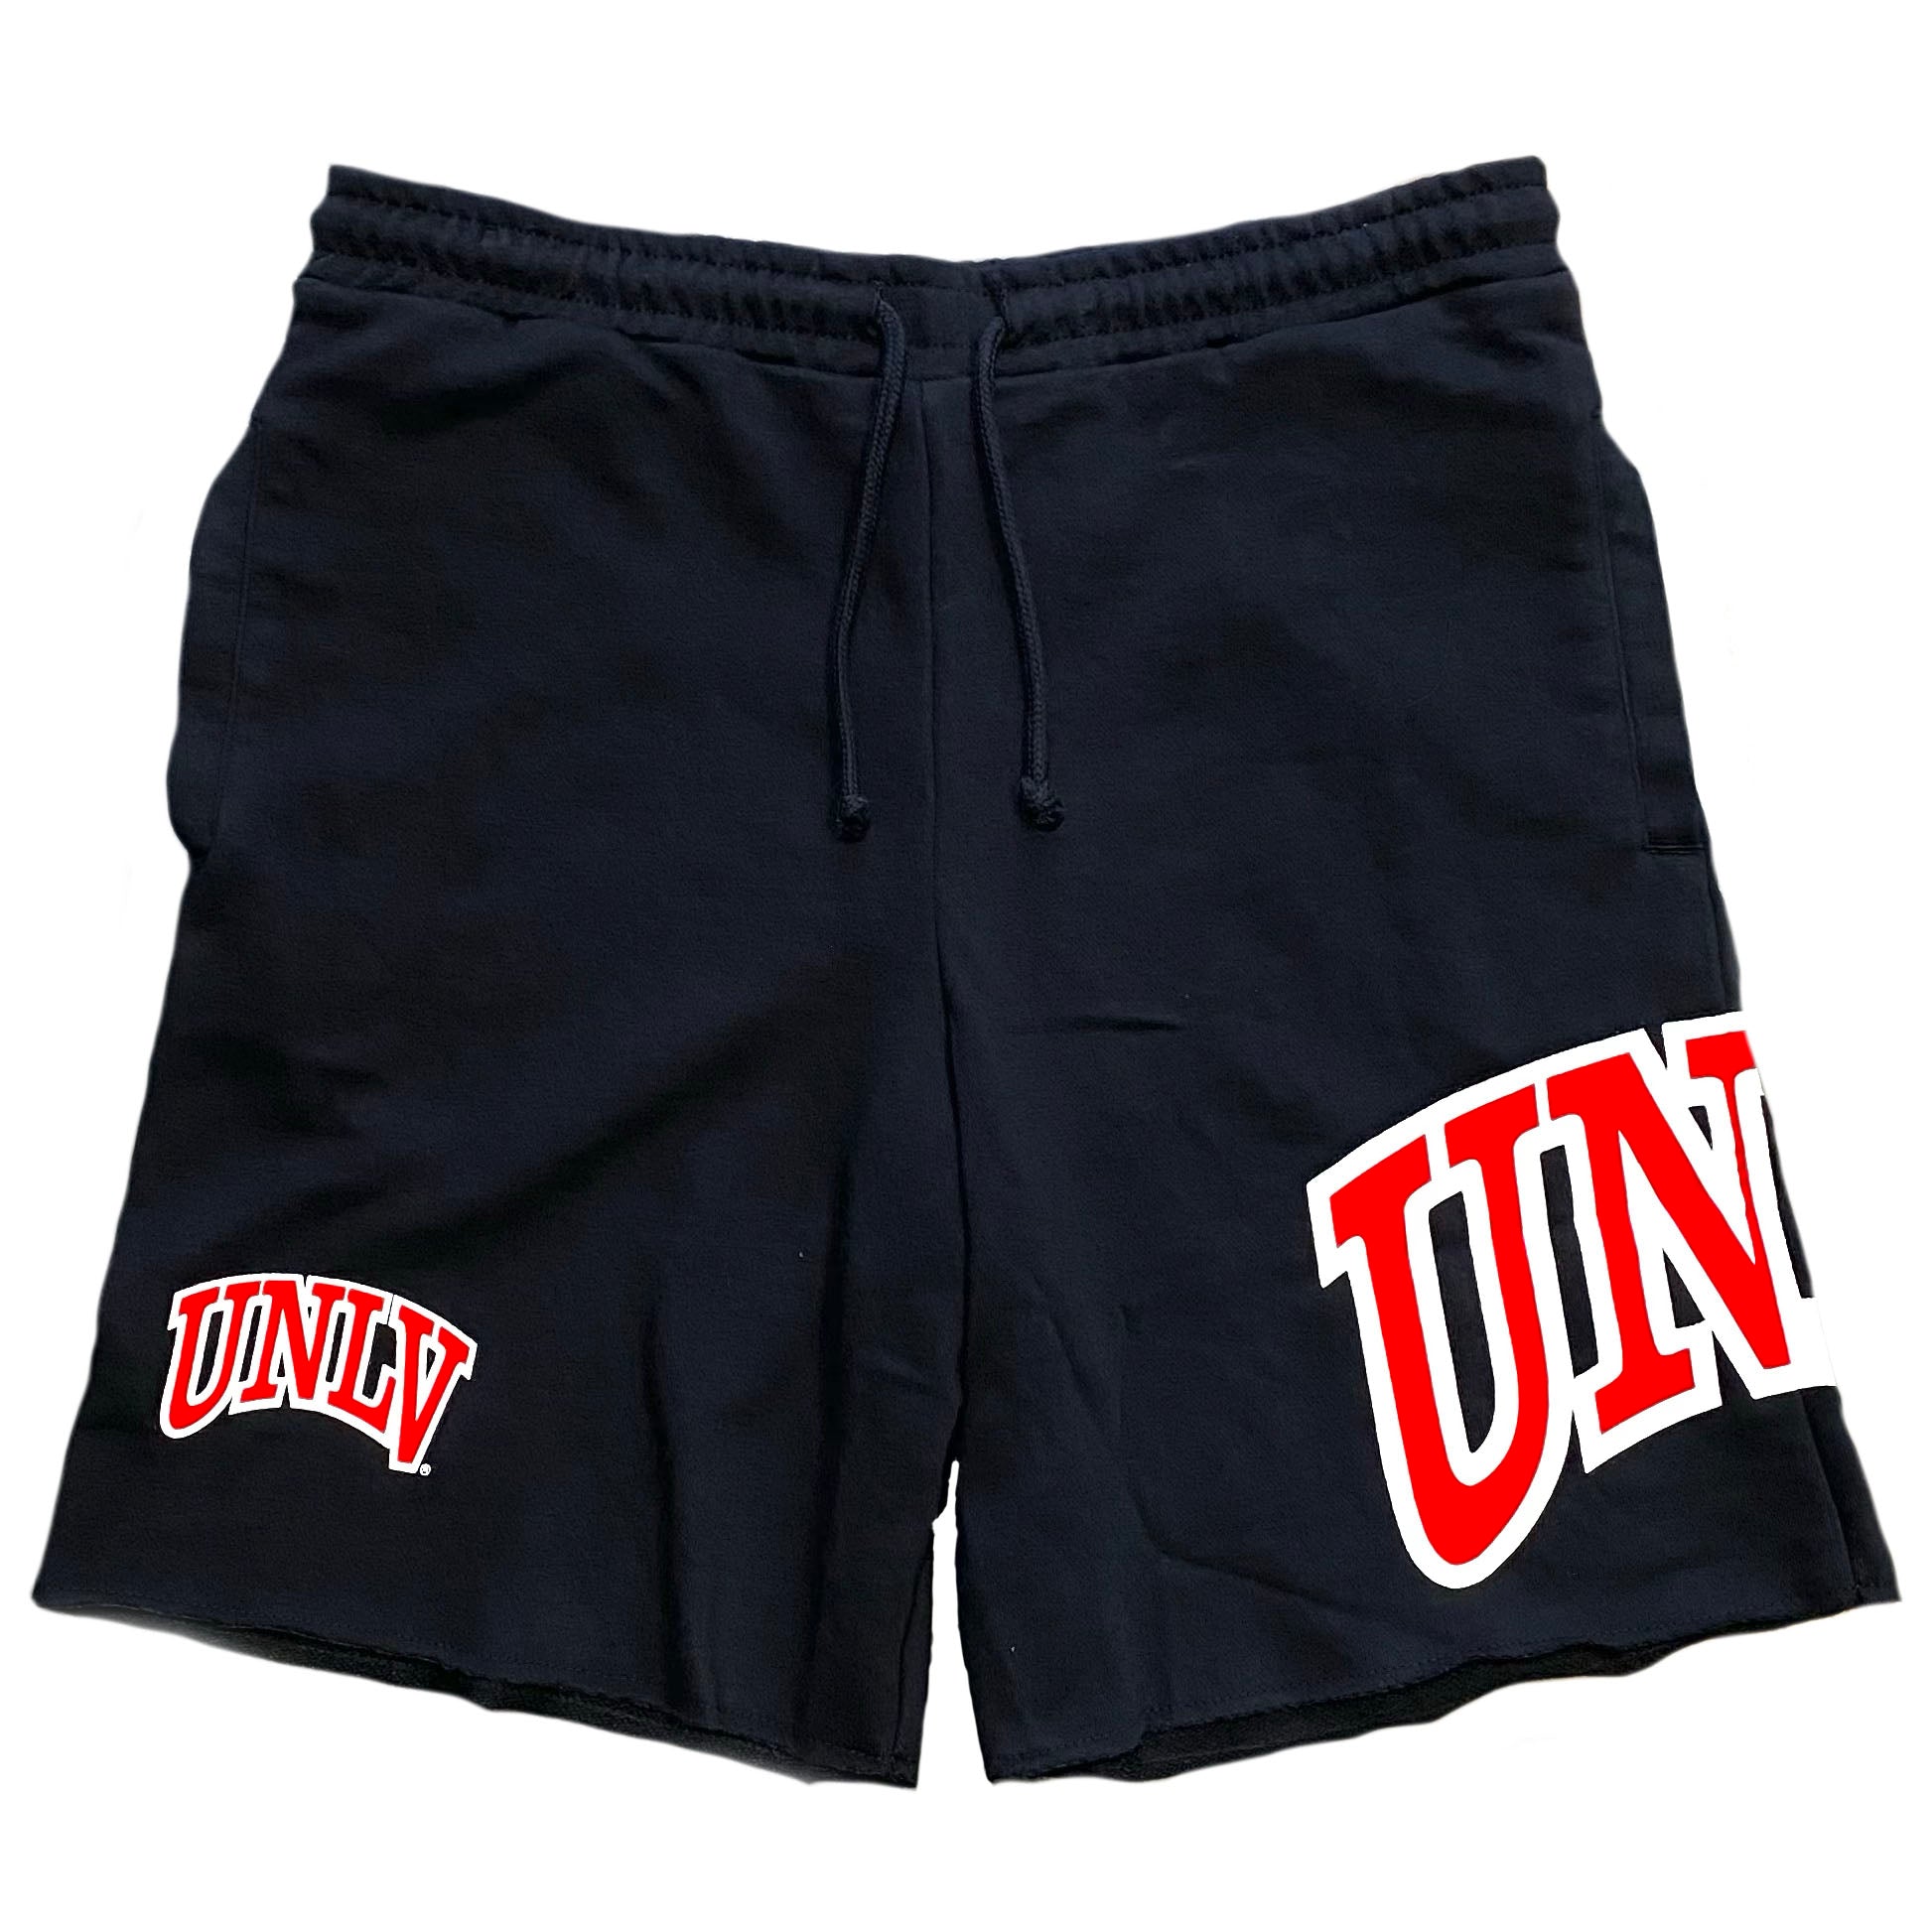 UNLV Men's Gameday Shorts - Black